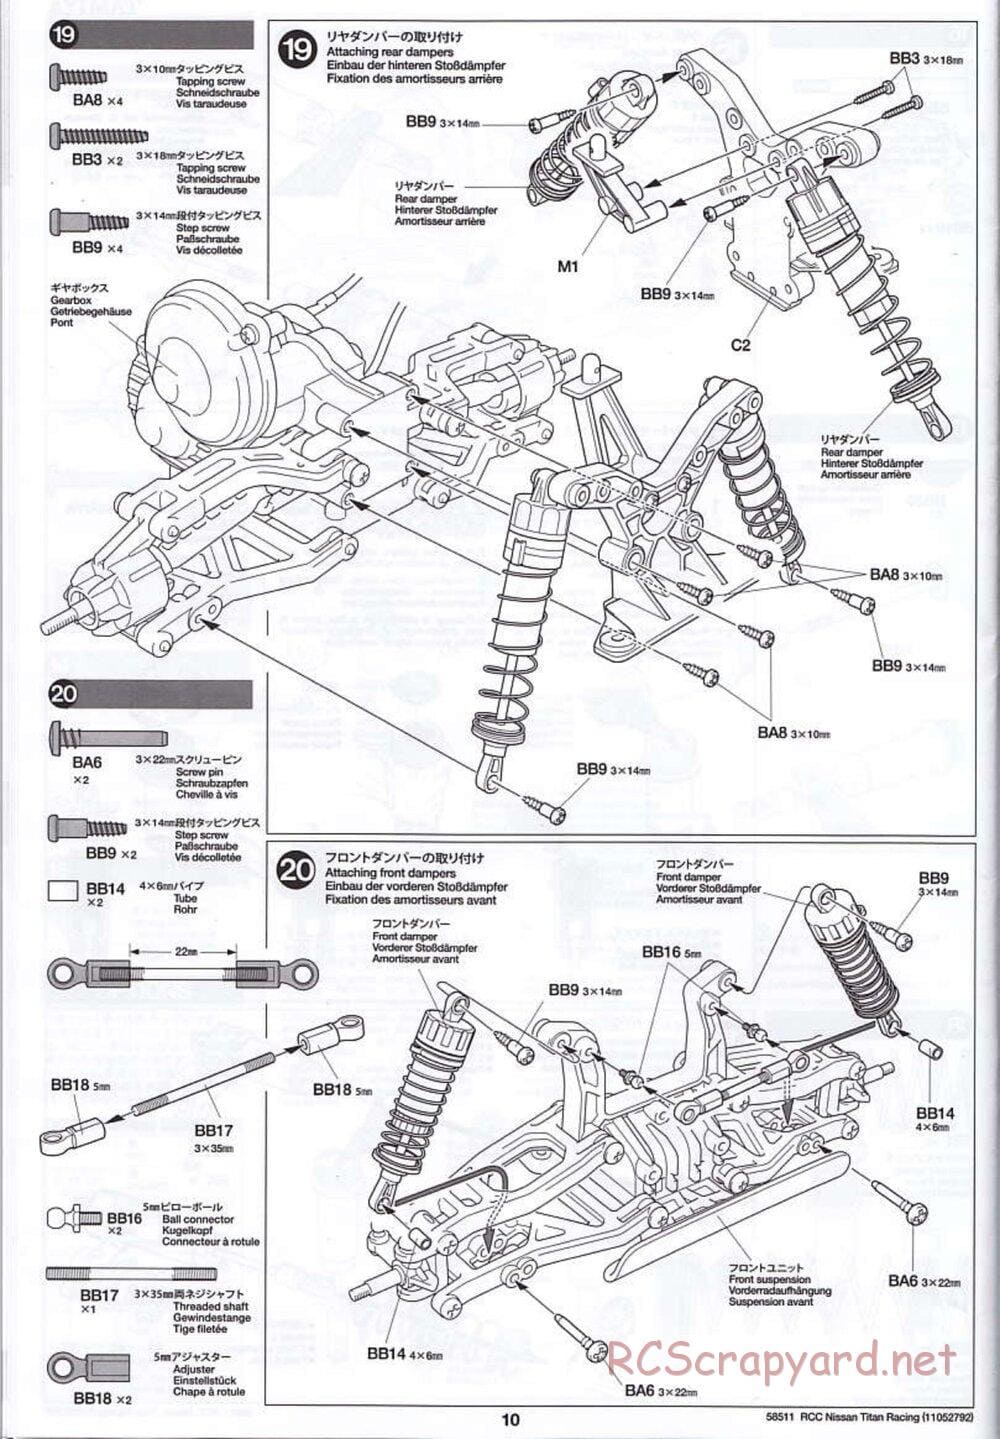 Tamiya - Nissan Titan Chassis - Manual - Page 10